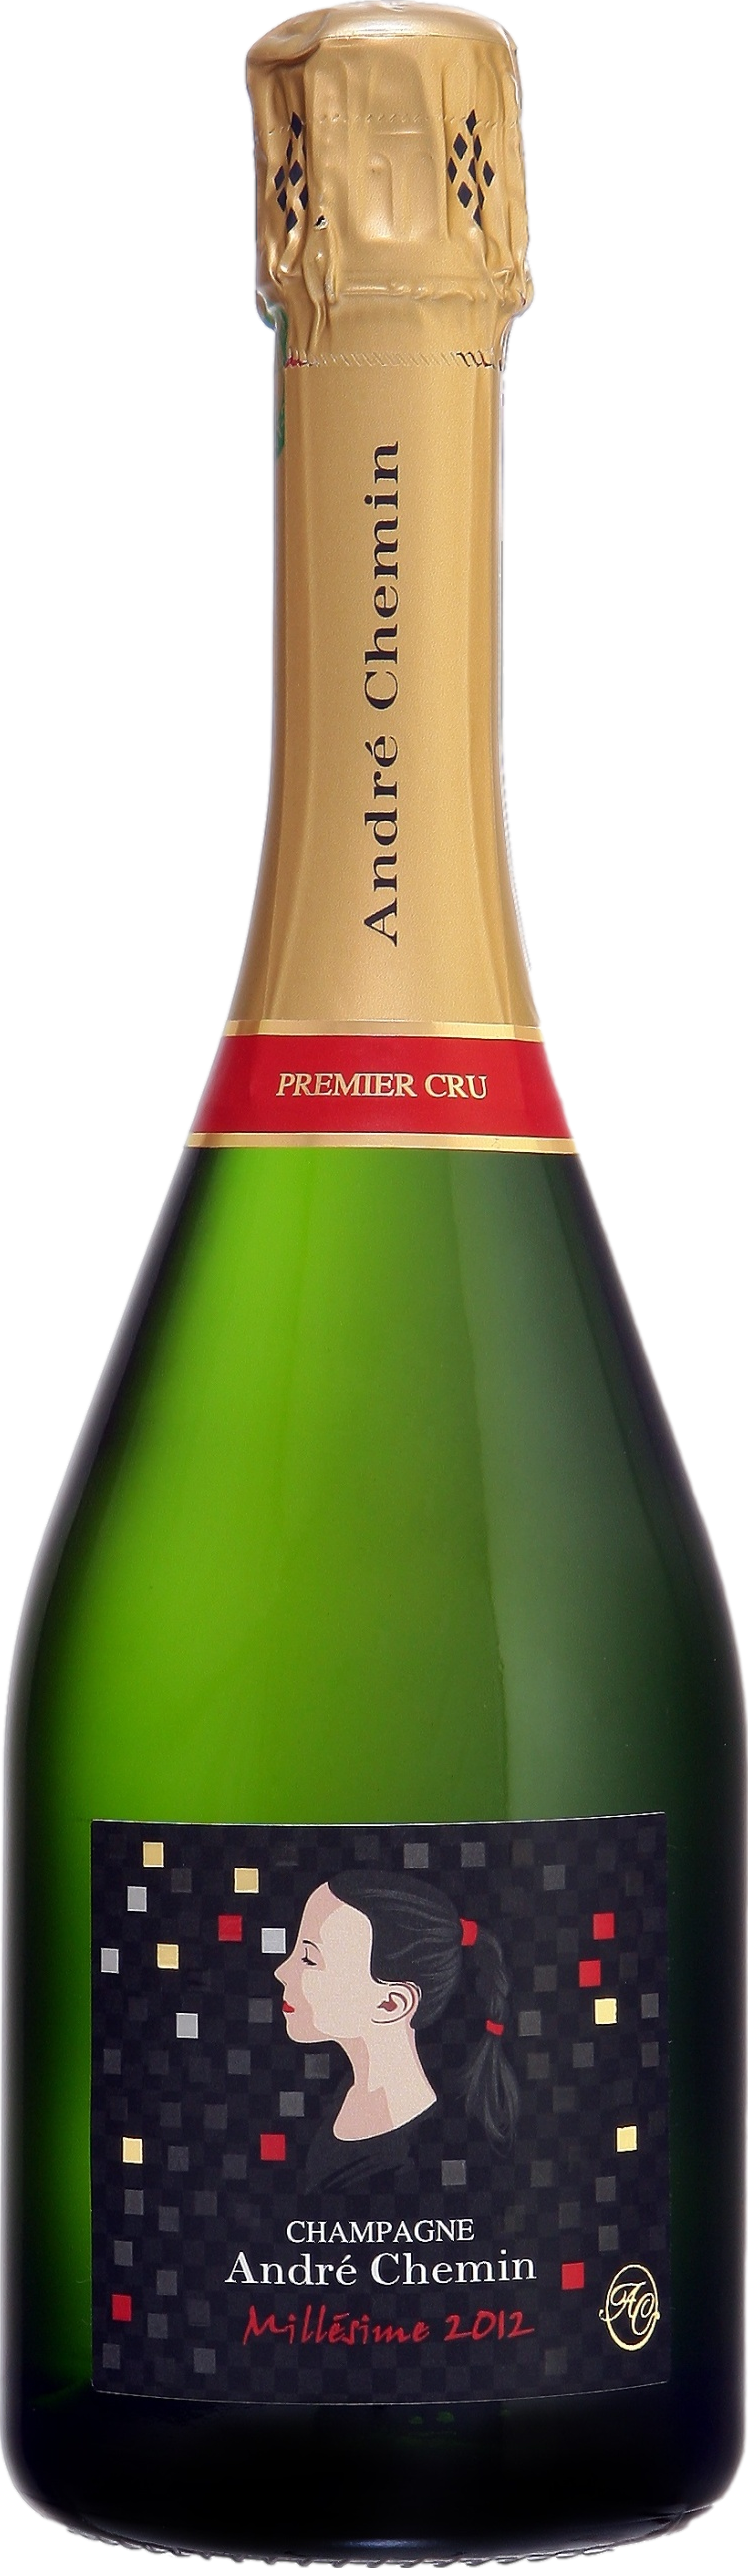 Champagne Andre Chemin Premier Cru Millesime Brut 2012